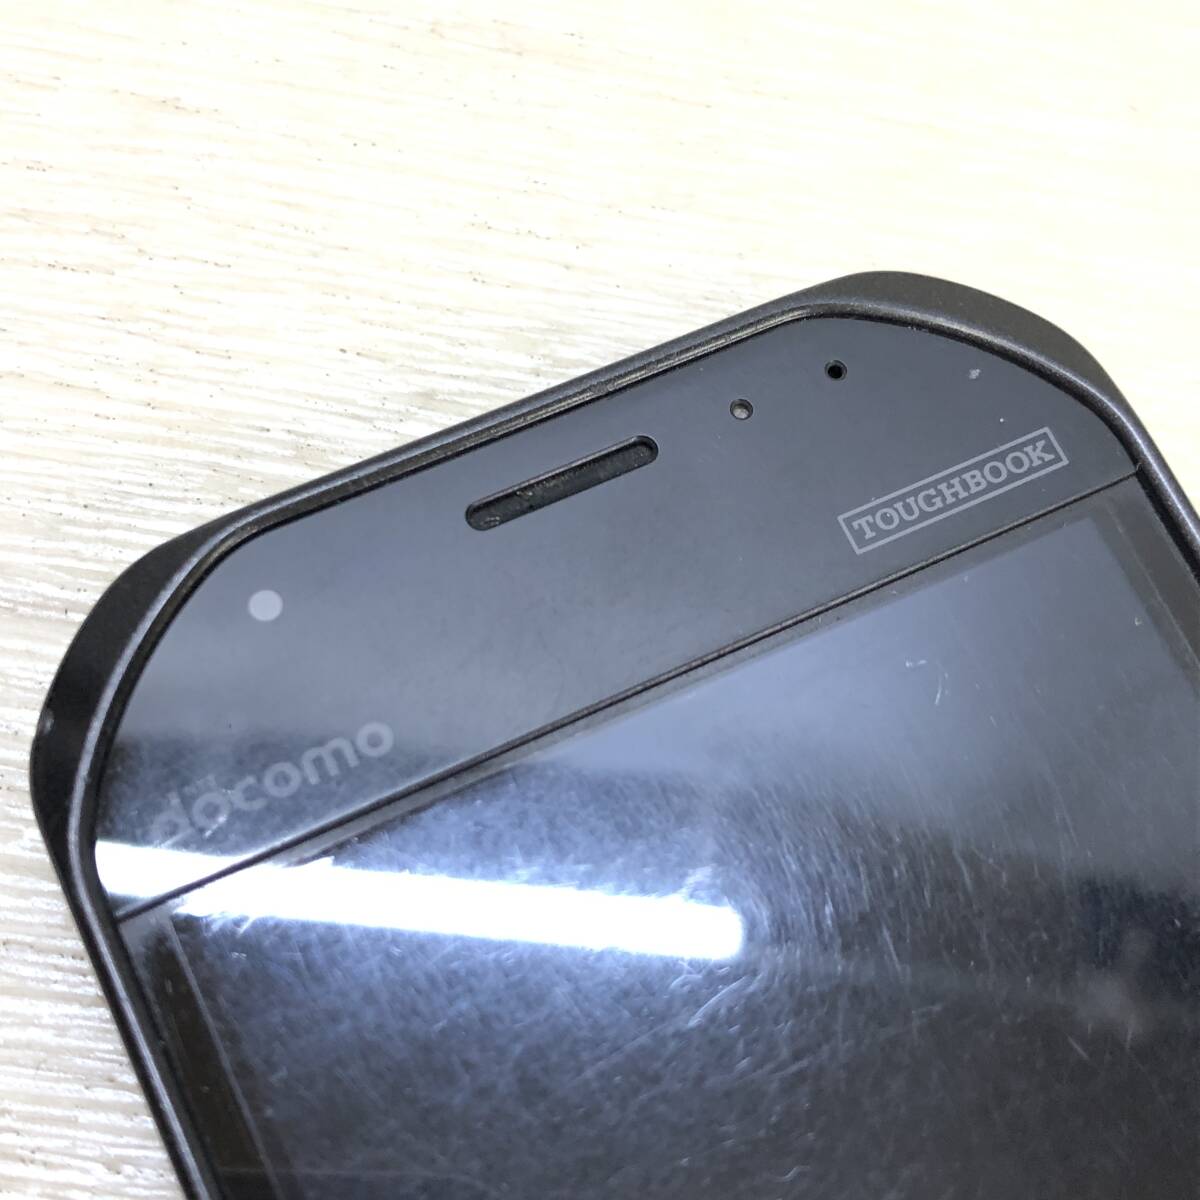 ★docomo ドコモ NTT TOUCHBOOK android スマートフォン 型番 P-01K IMEI「〇」 16GB 携帯 動作確認済み 中古品★G02231_画像6